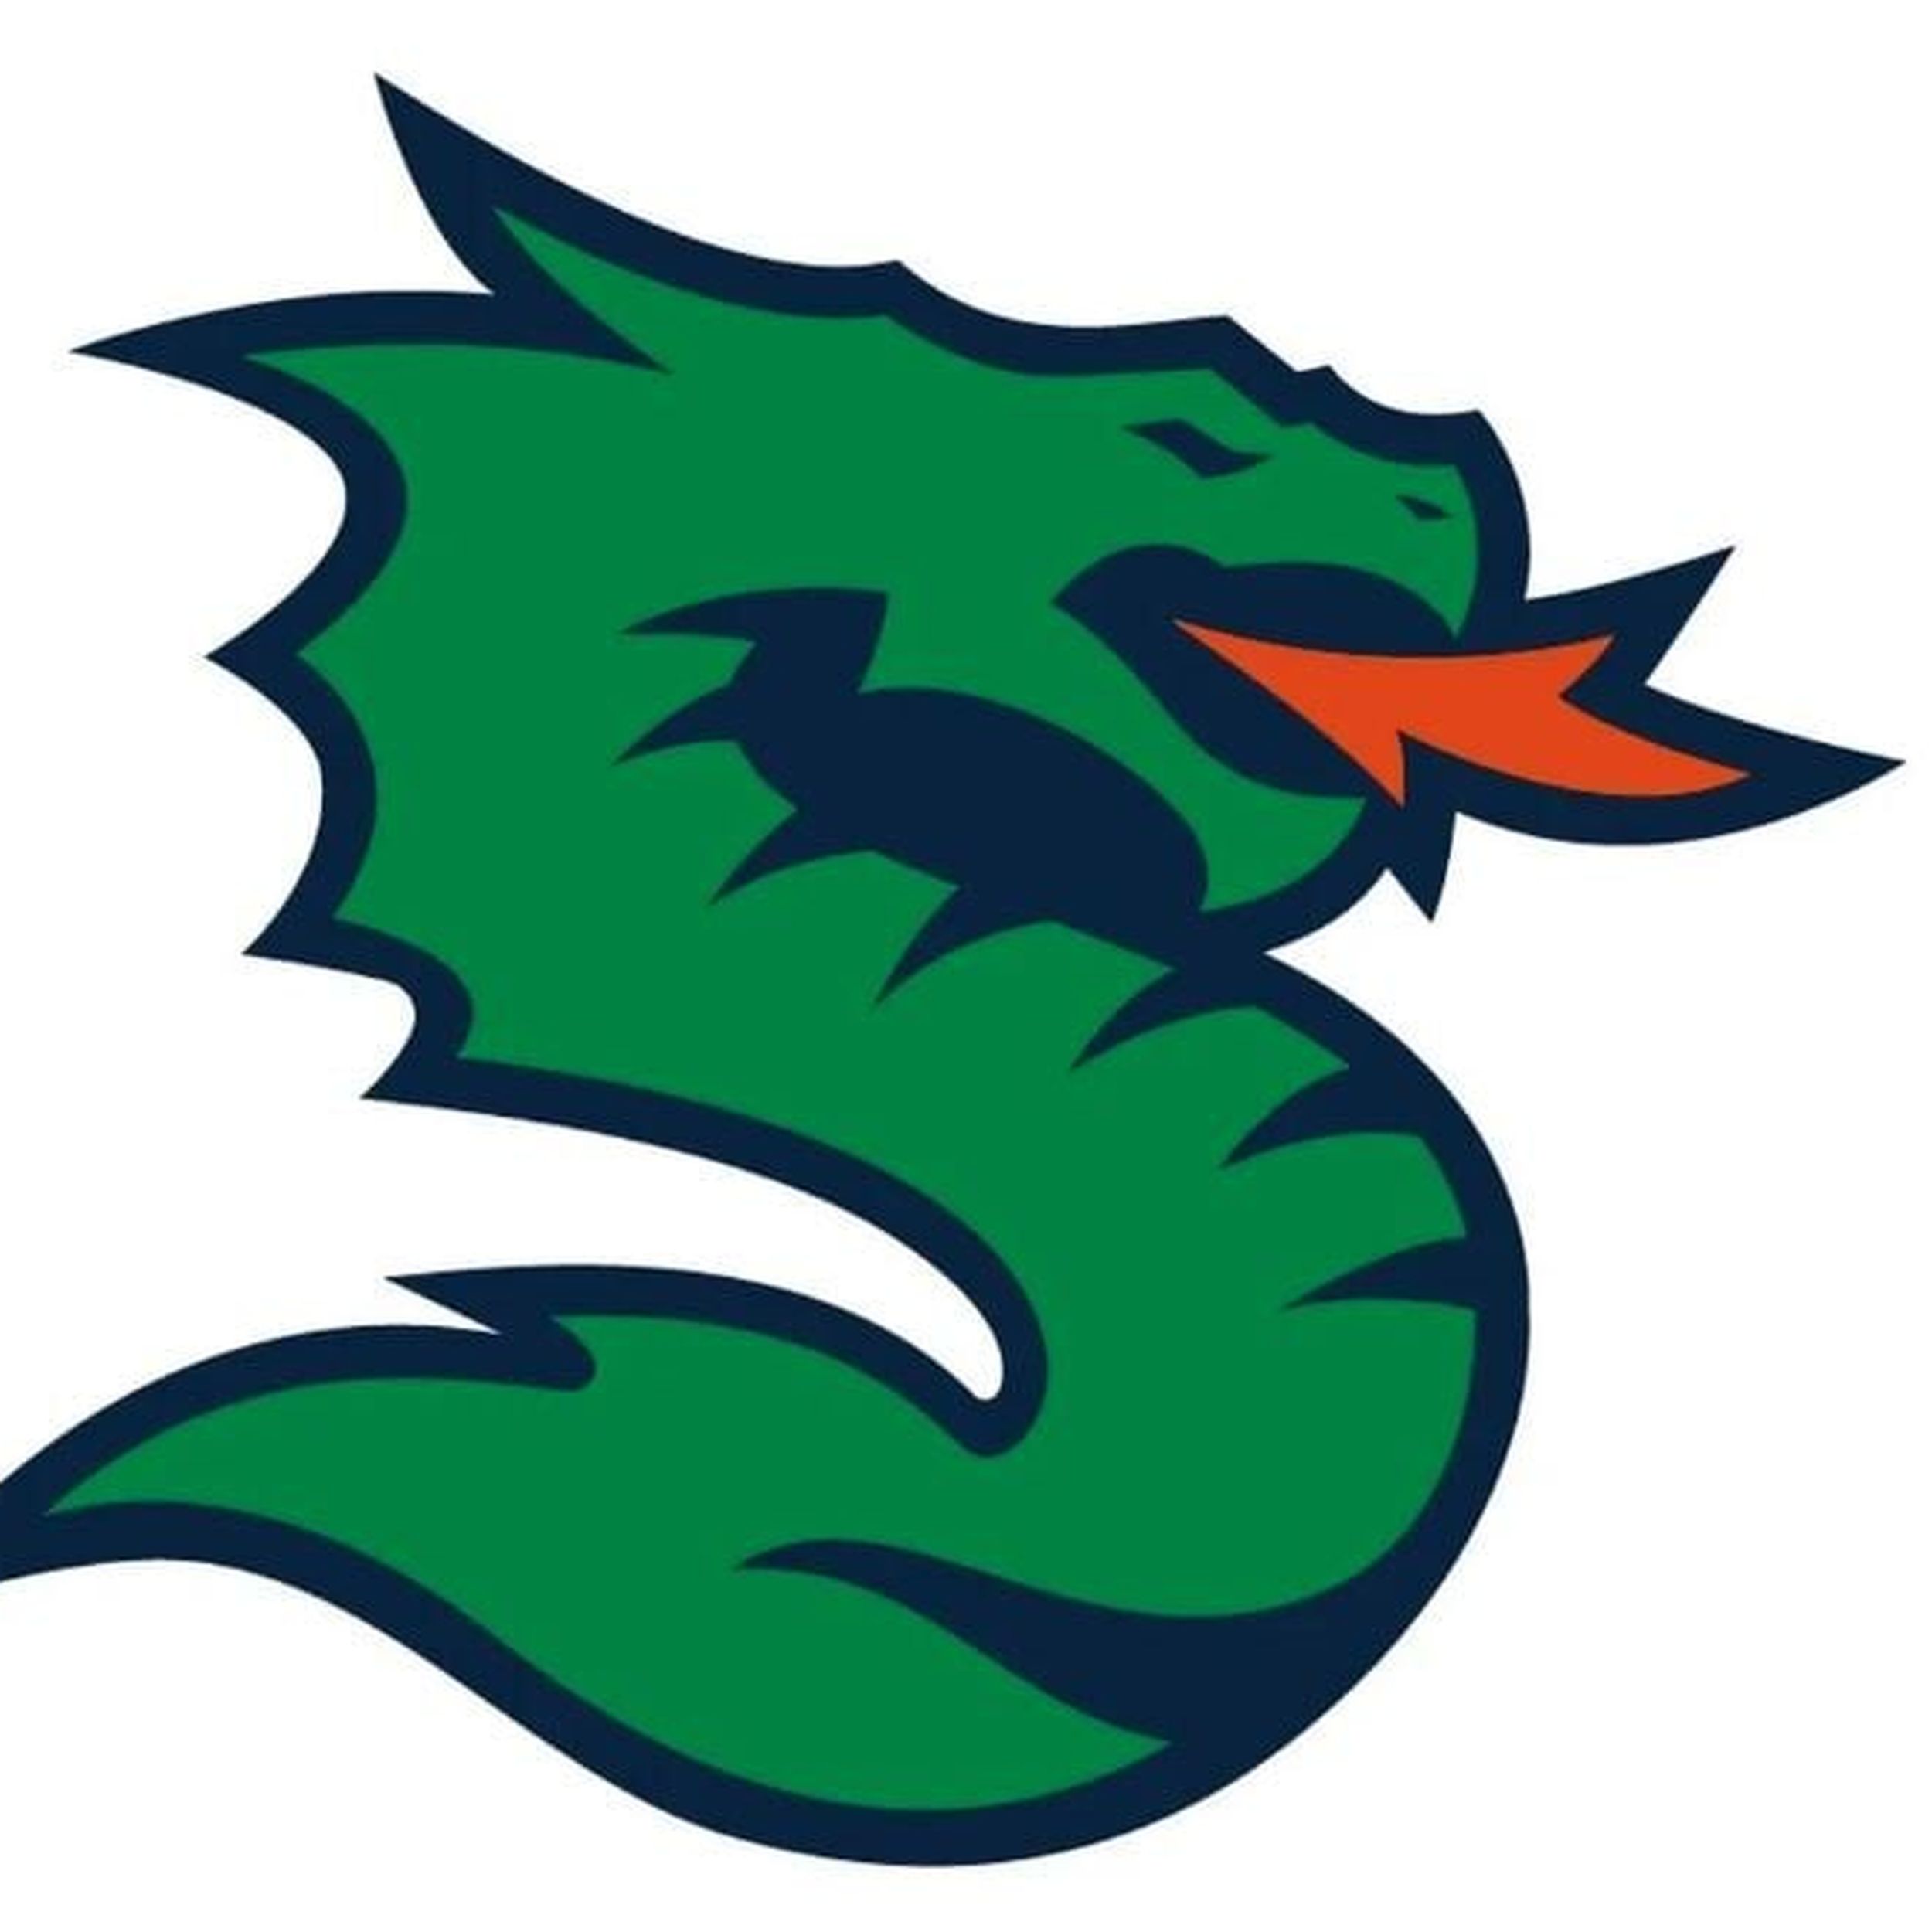 XFL unveils Seattle Sea Dragons new logo 